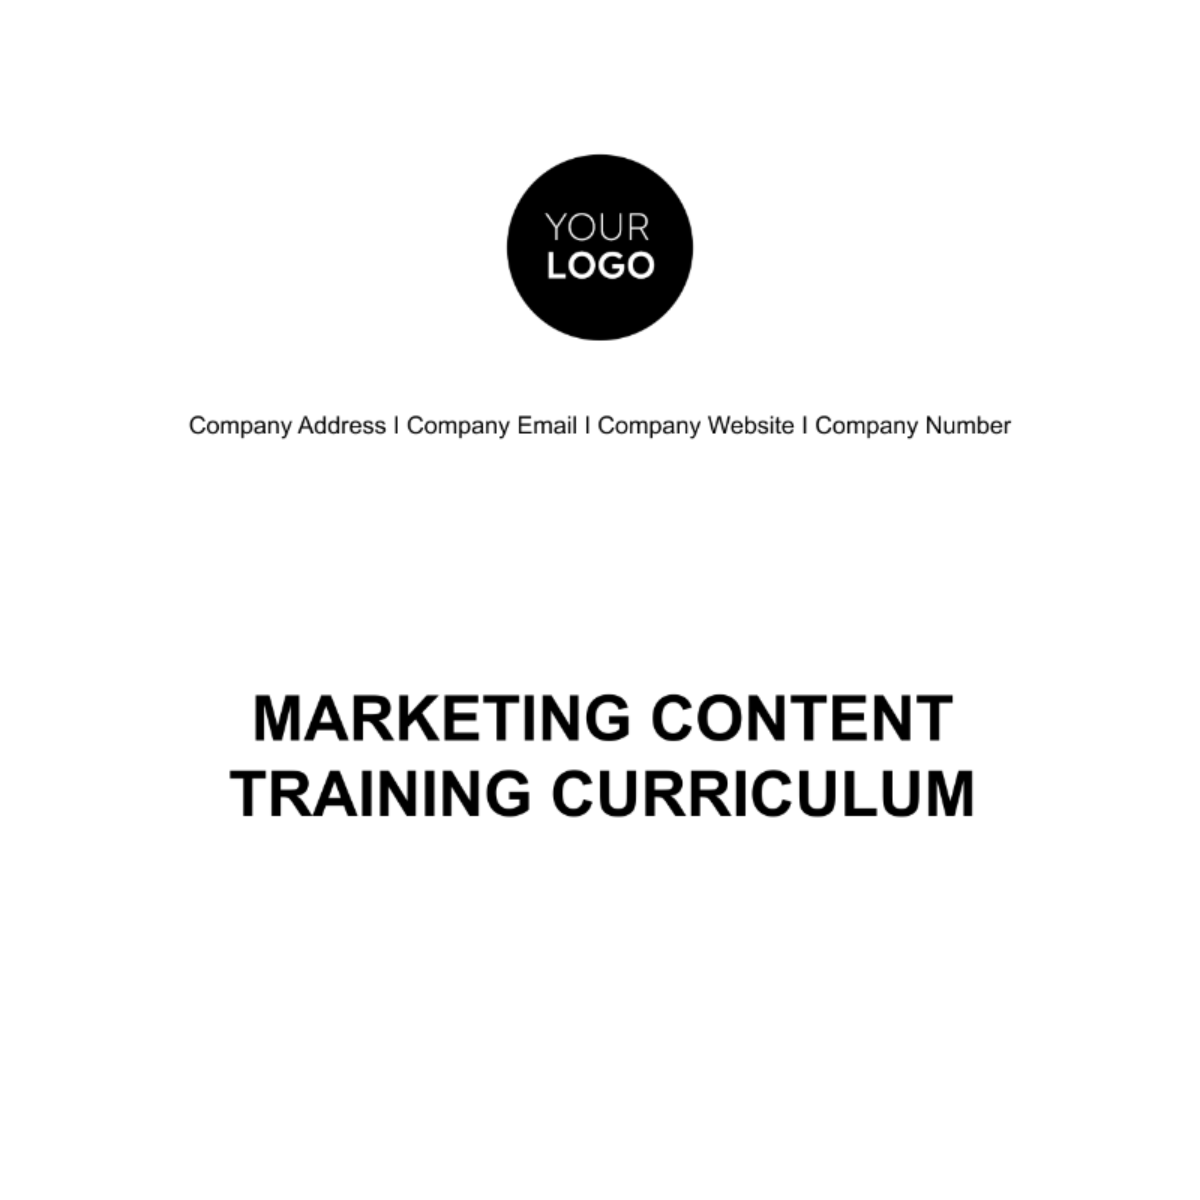 Marketing Content Training Curriculum Template